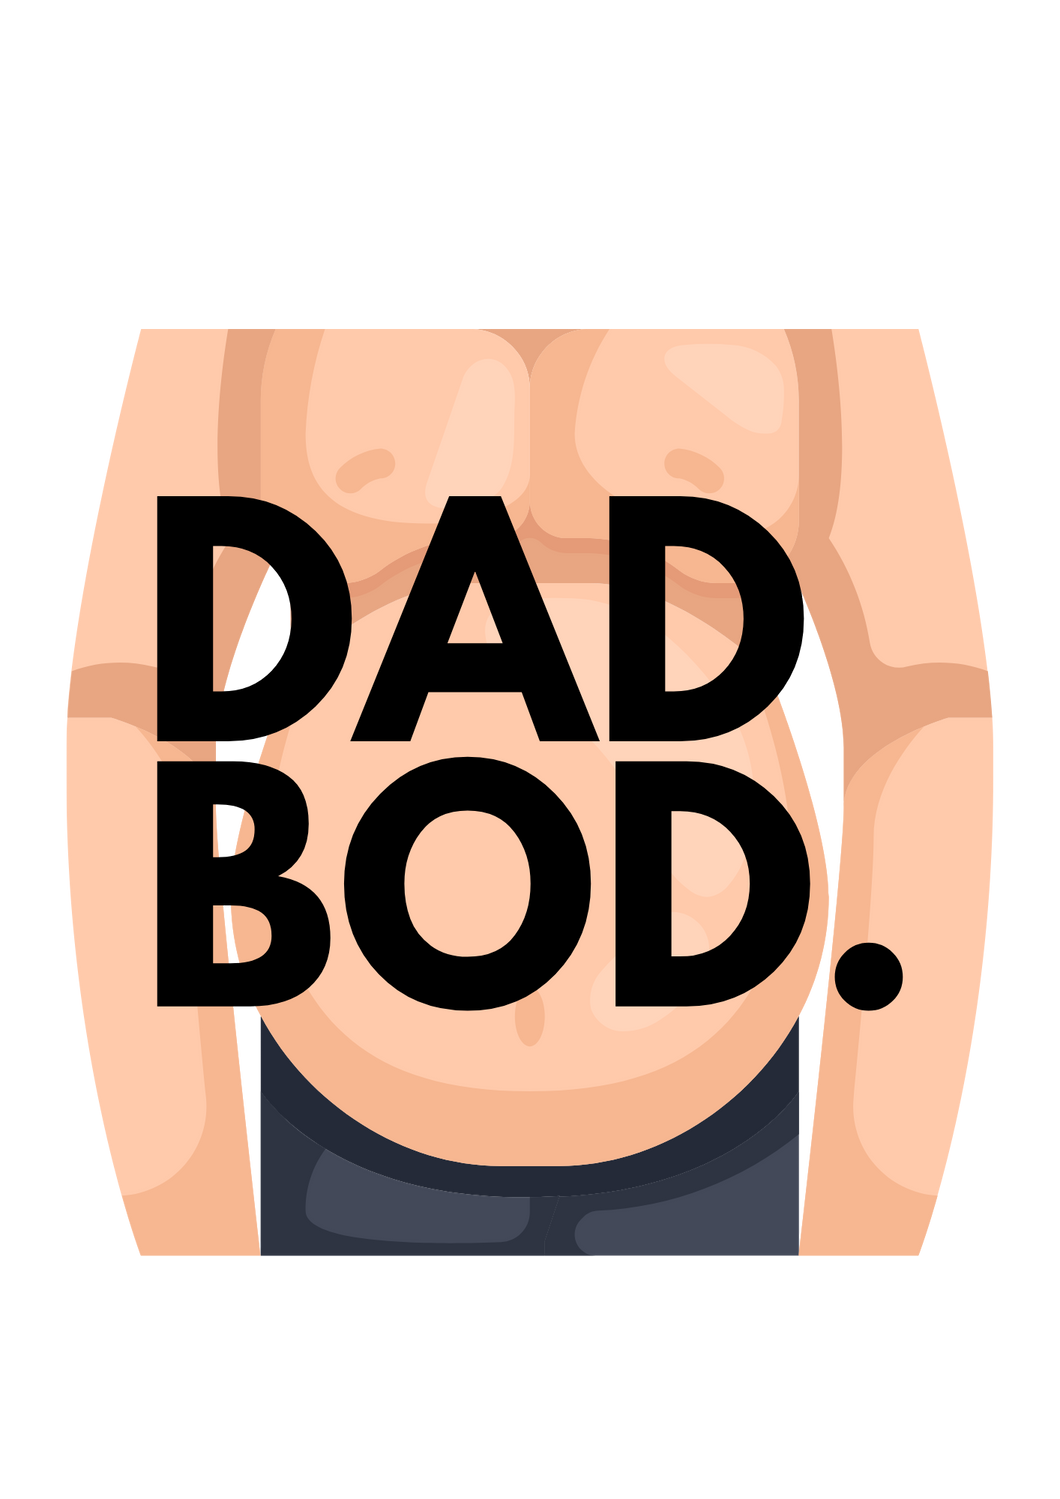 Dad Bod Image Sublimation Print